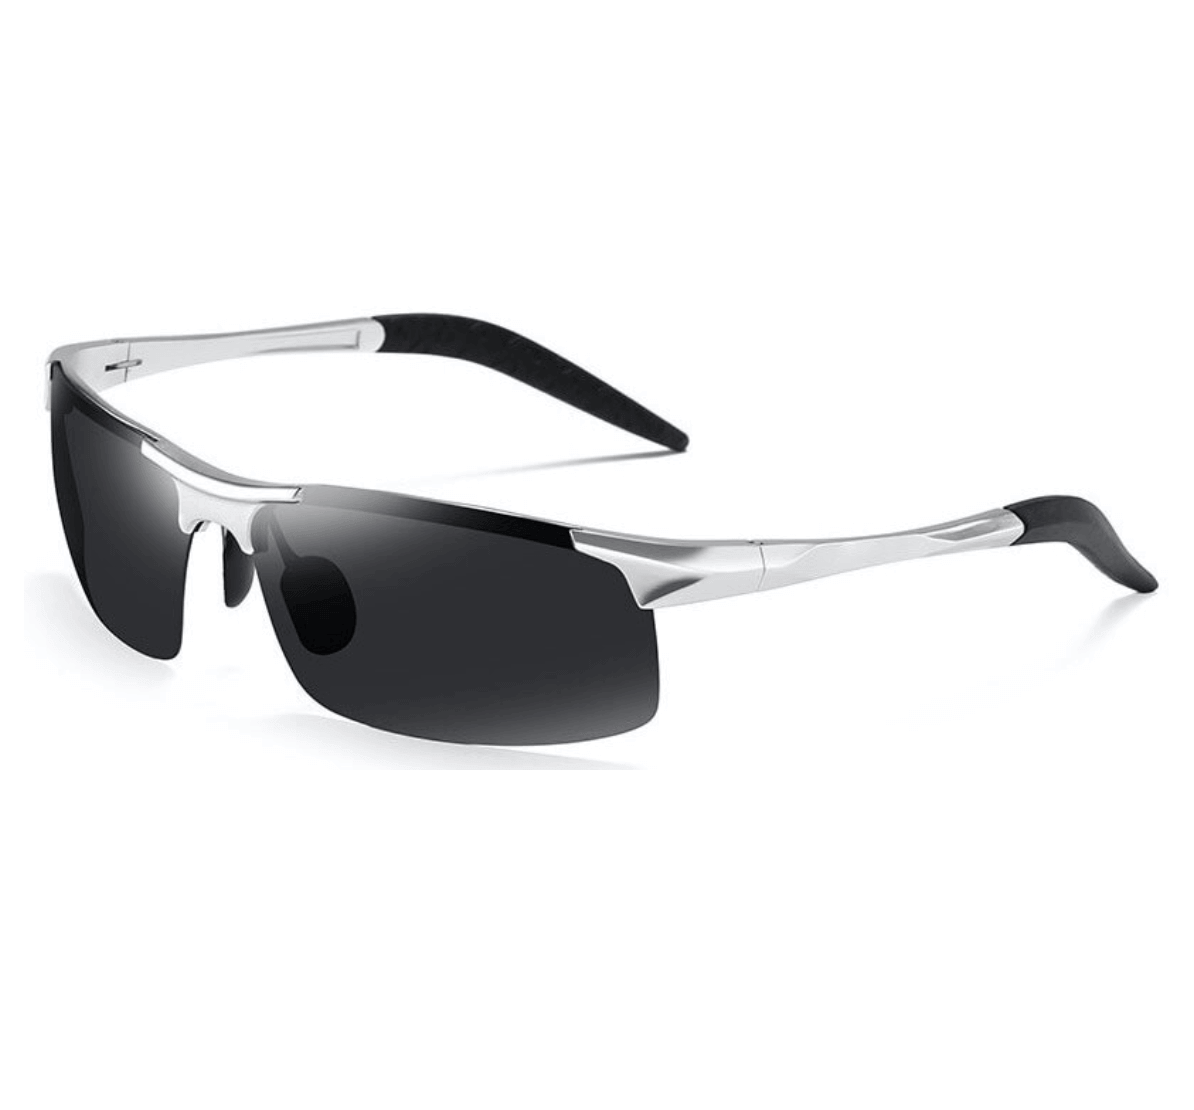 wholesale plastic sunglasses, bulk order plastic sunglasses, sunglasses in bulk cheap, Sunglasses Manufacturer, sunglasses factory